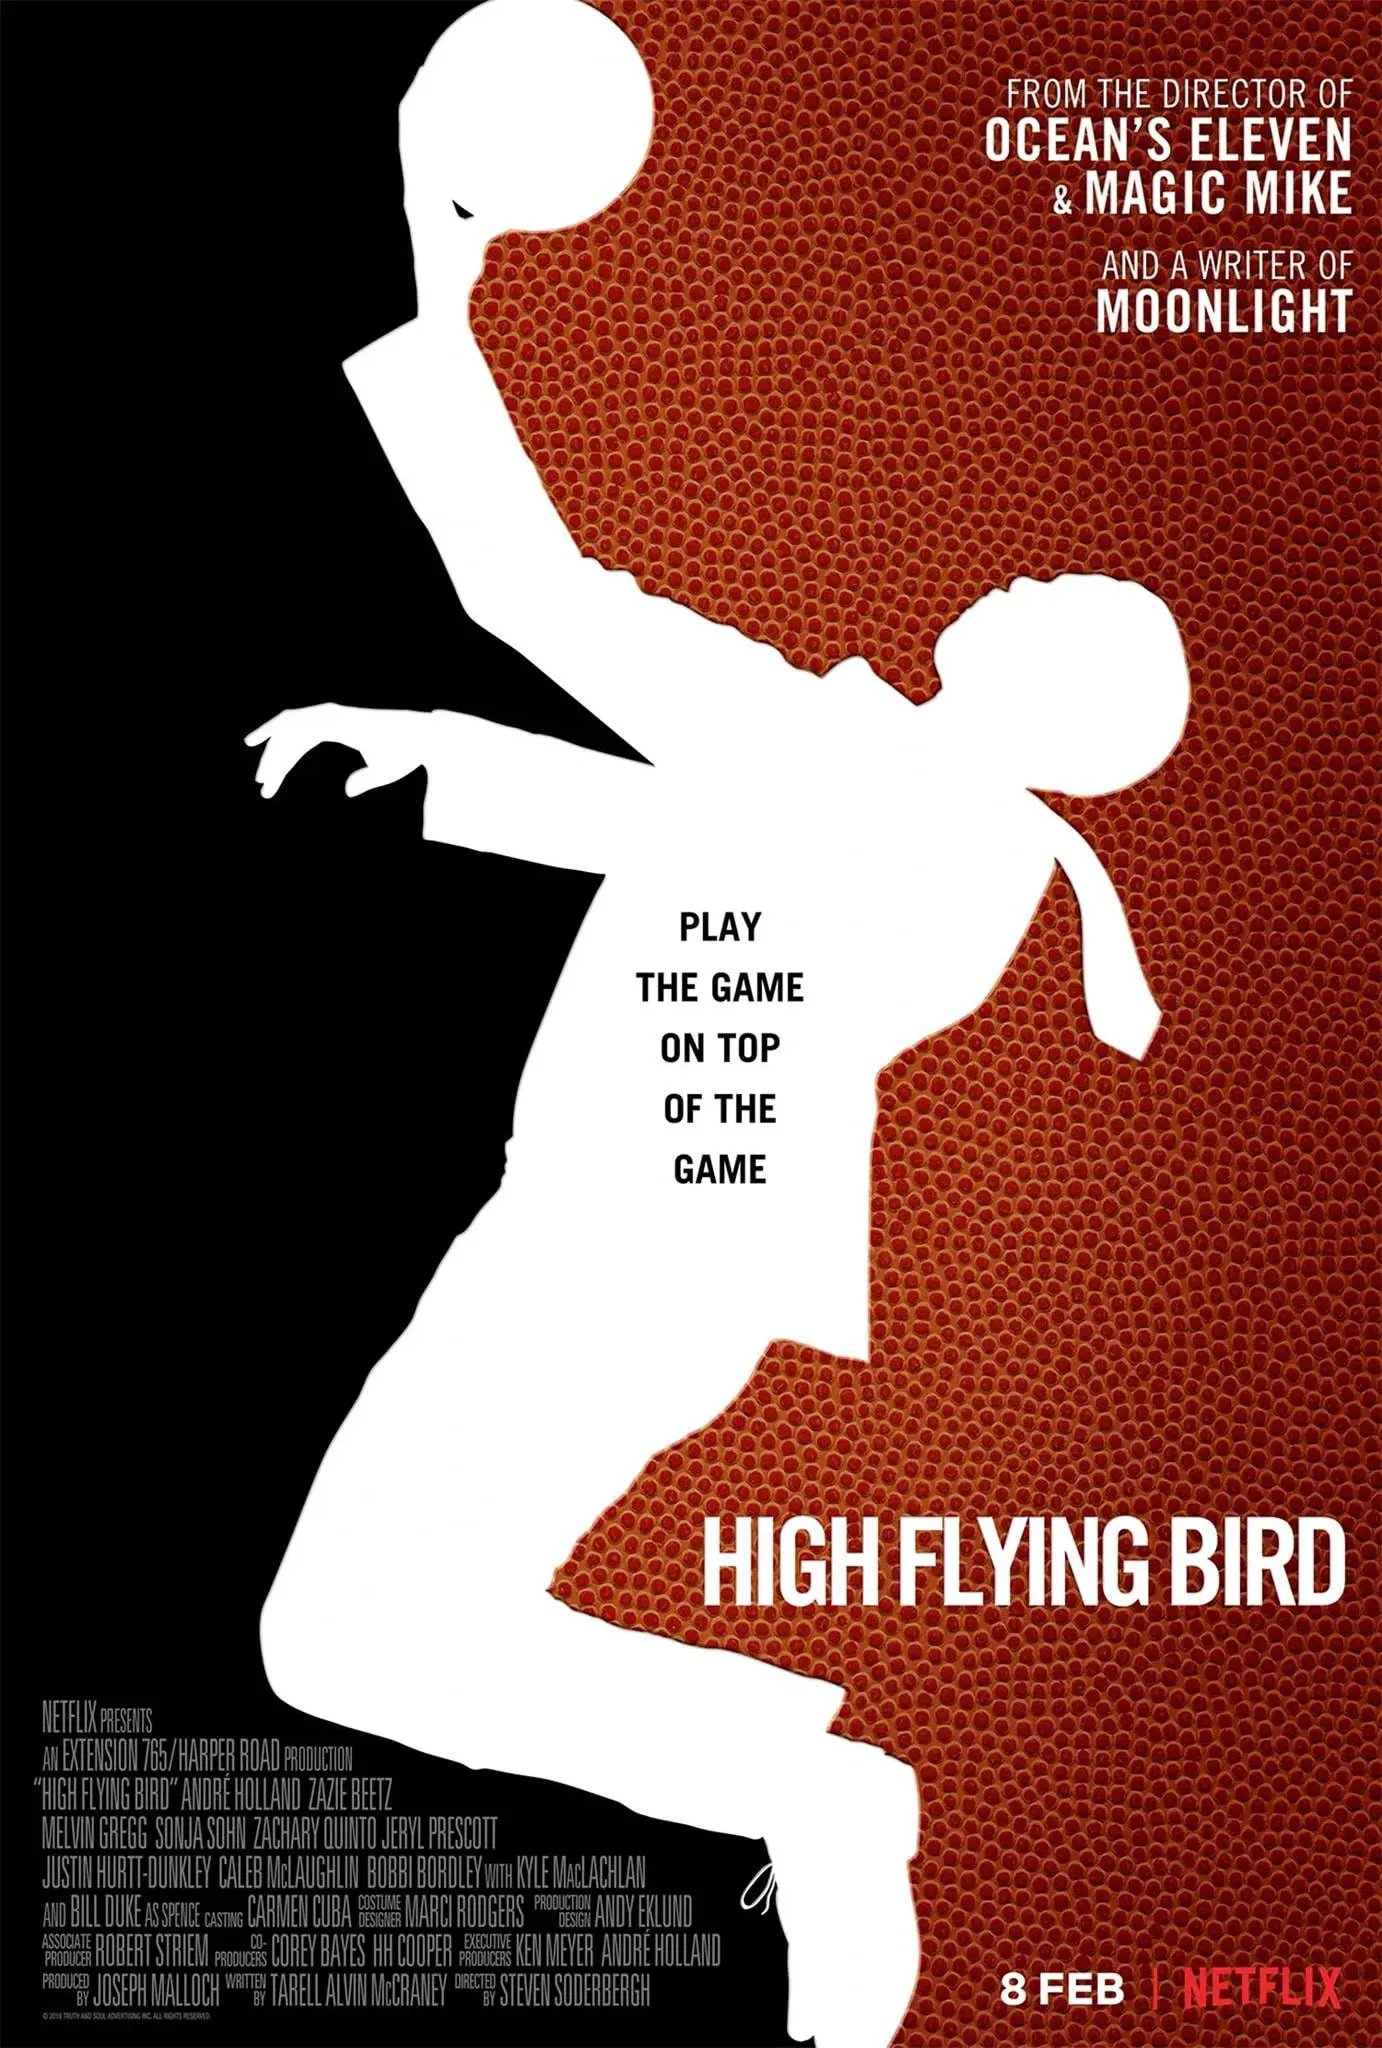 High Flying Bird won seven nominations including BET Awards 2019